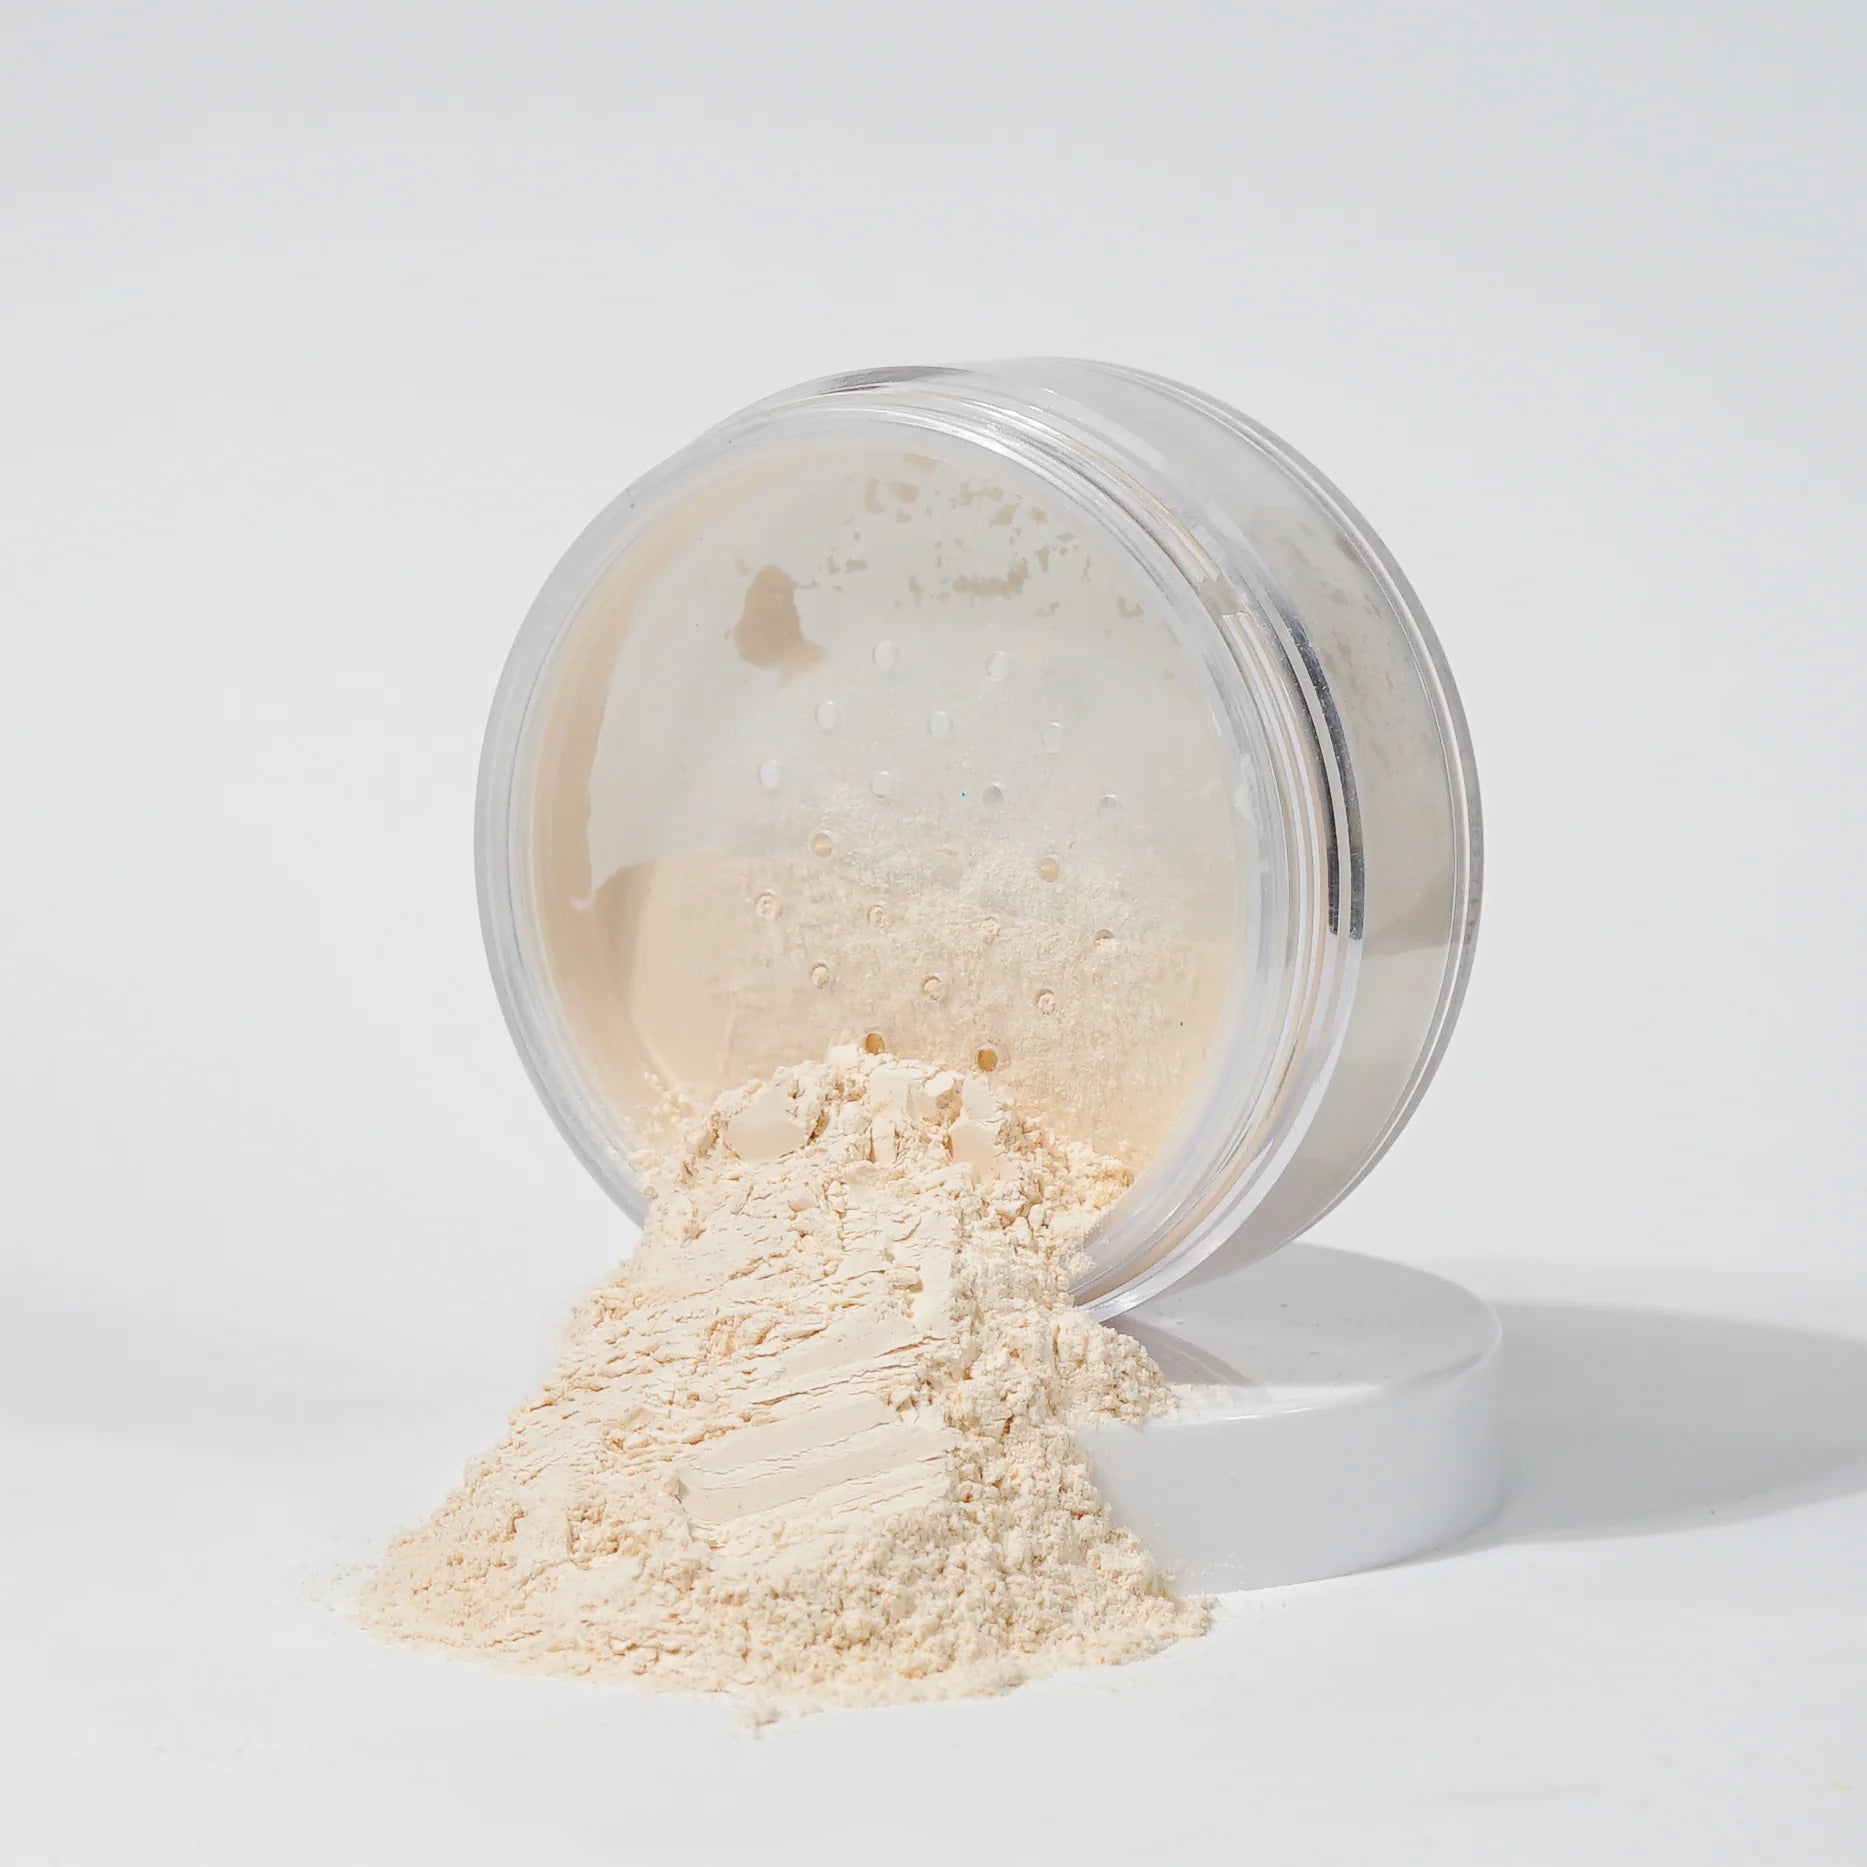 Kara Beauty - Essentials Setting Powder - Translucent Light